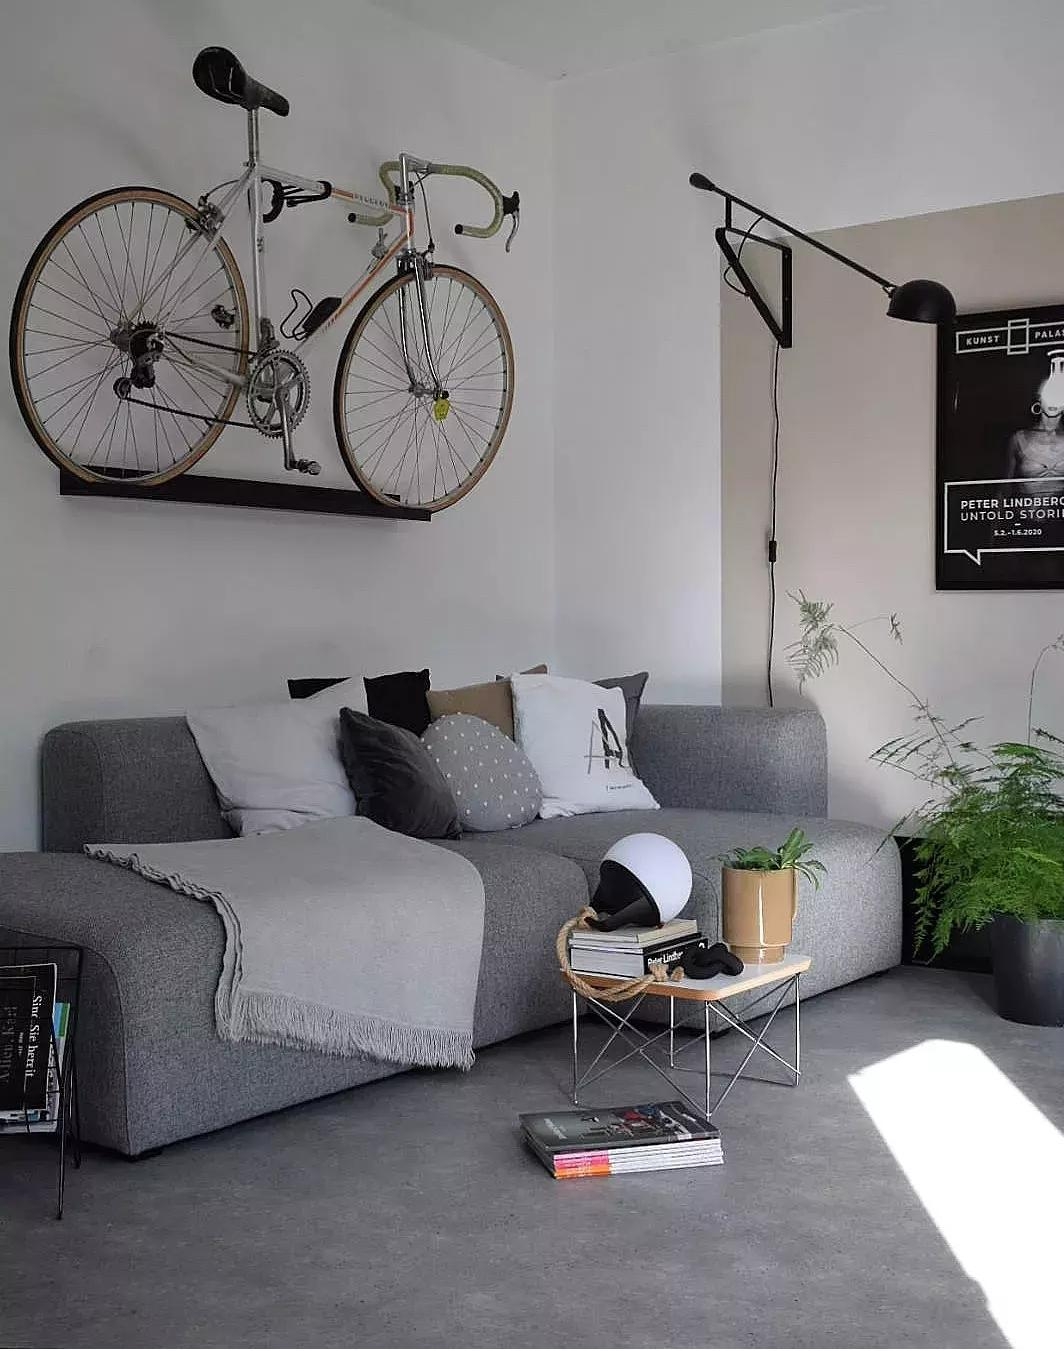 Grau, schwarz und beige...genau so mag ich es.
#livingroom #sofa #wall #wohnzimmer fast #monochrom